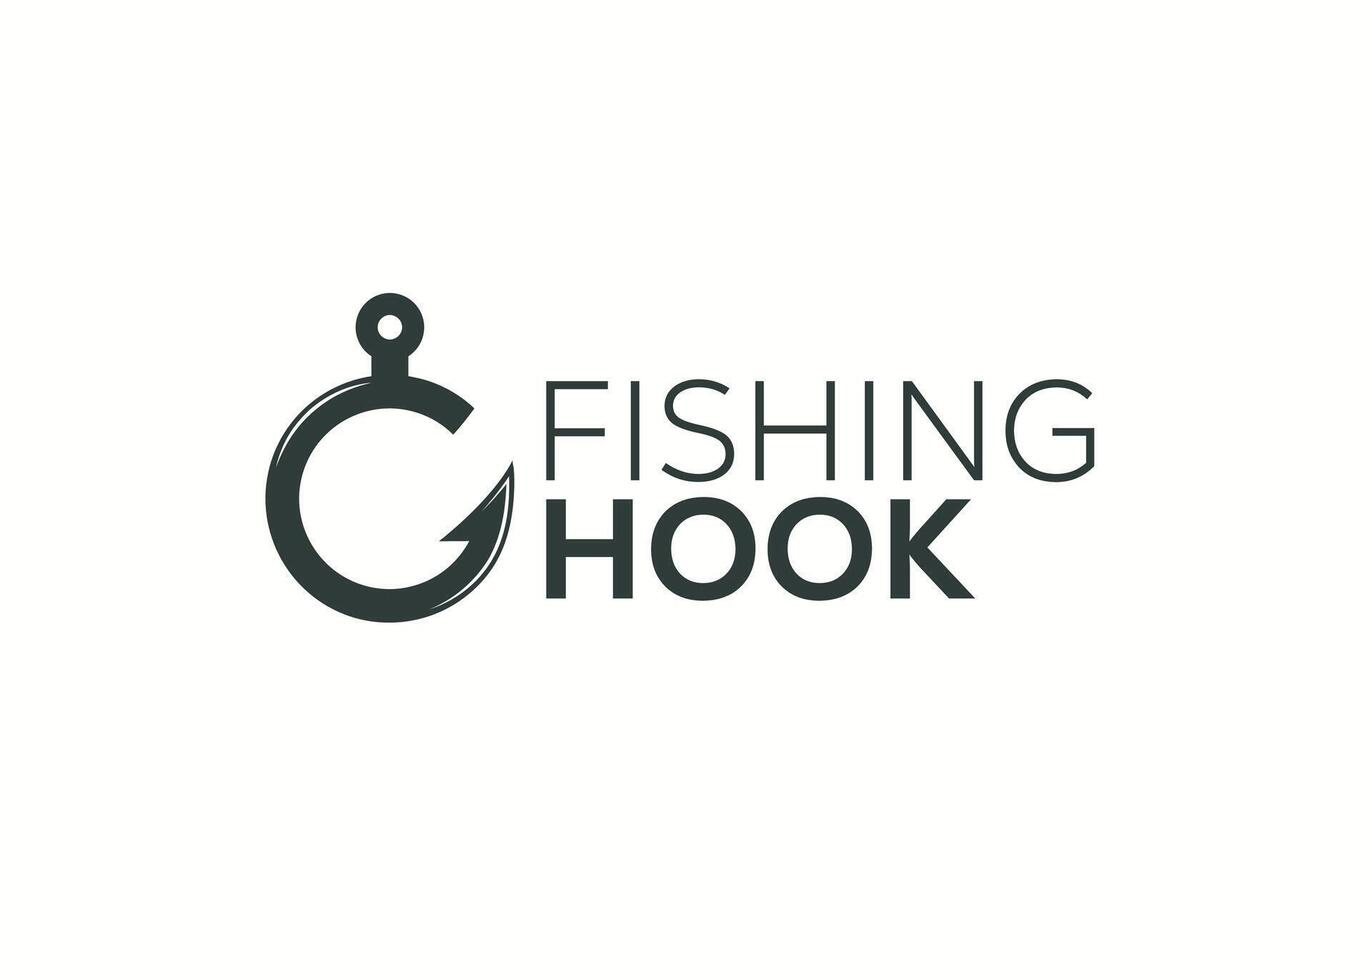 minimalista pescar gancho logo diseño vector modelo. pescar gancho vector ilustración. moderno pescado gancho logo